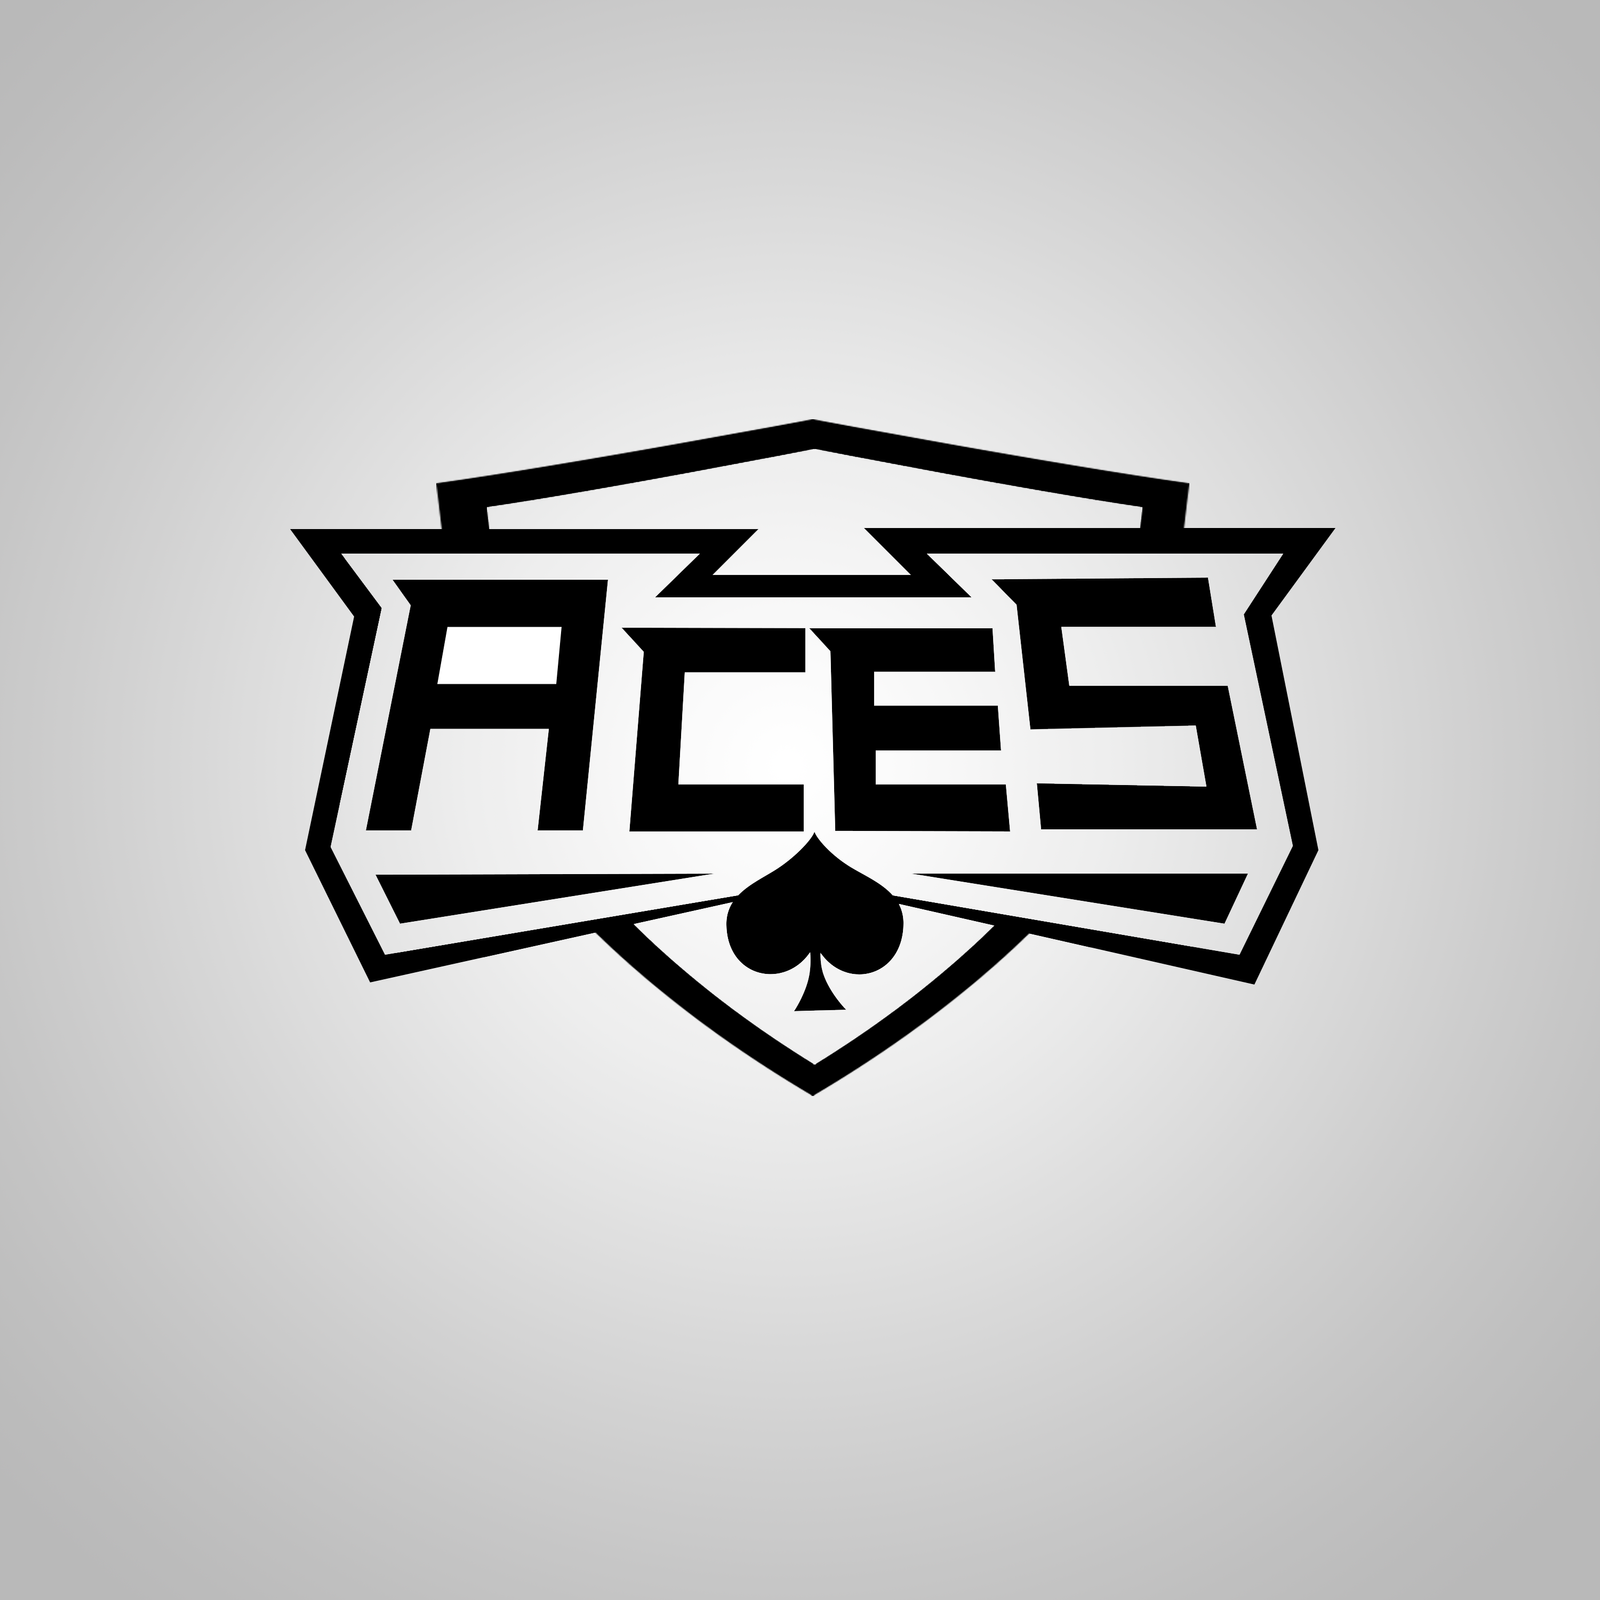 concept logo ACES cybersport team by ssaazz on DeviantArt